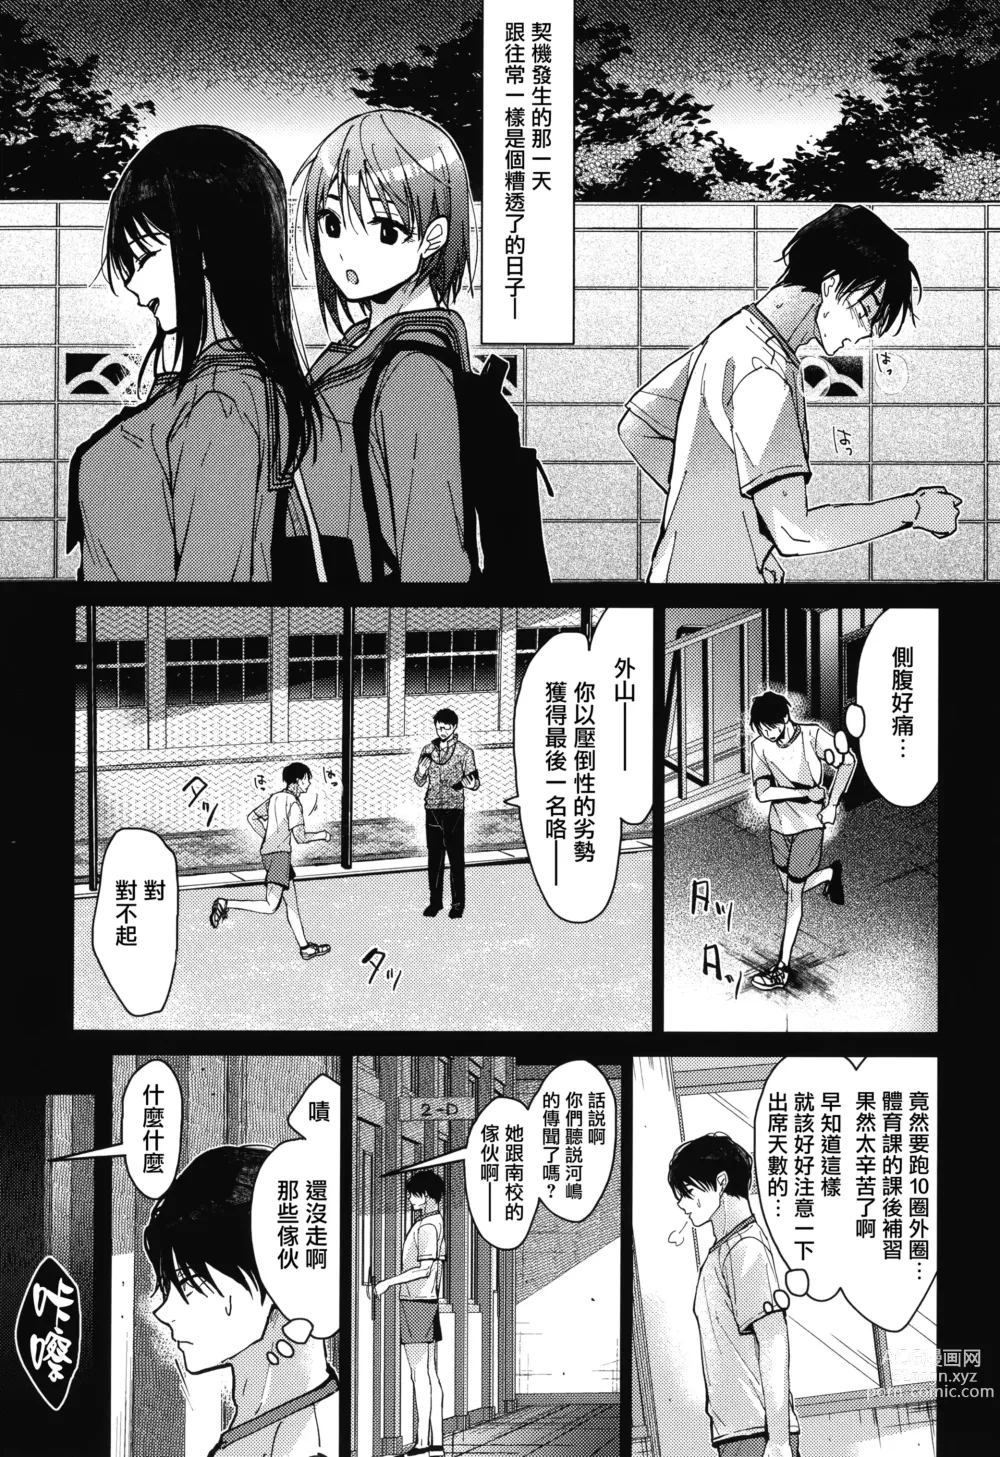 Page 5 of manga Amami + Toranoana Kounyuu Tokuten 4P Leaflet